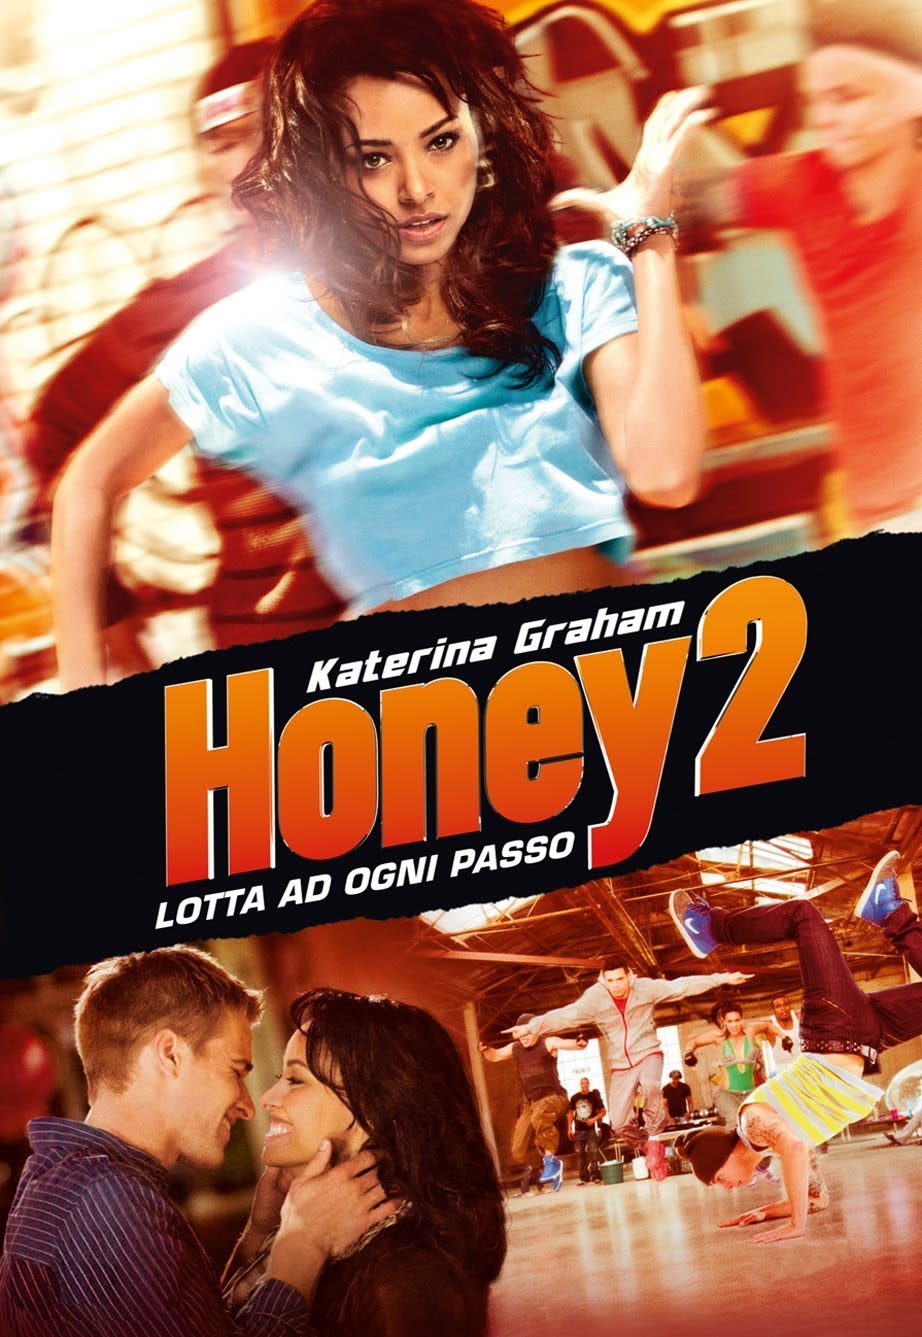 Honey 2 – Lotta ad ogni passo [HD] (2011)